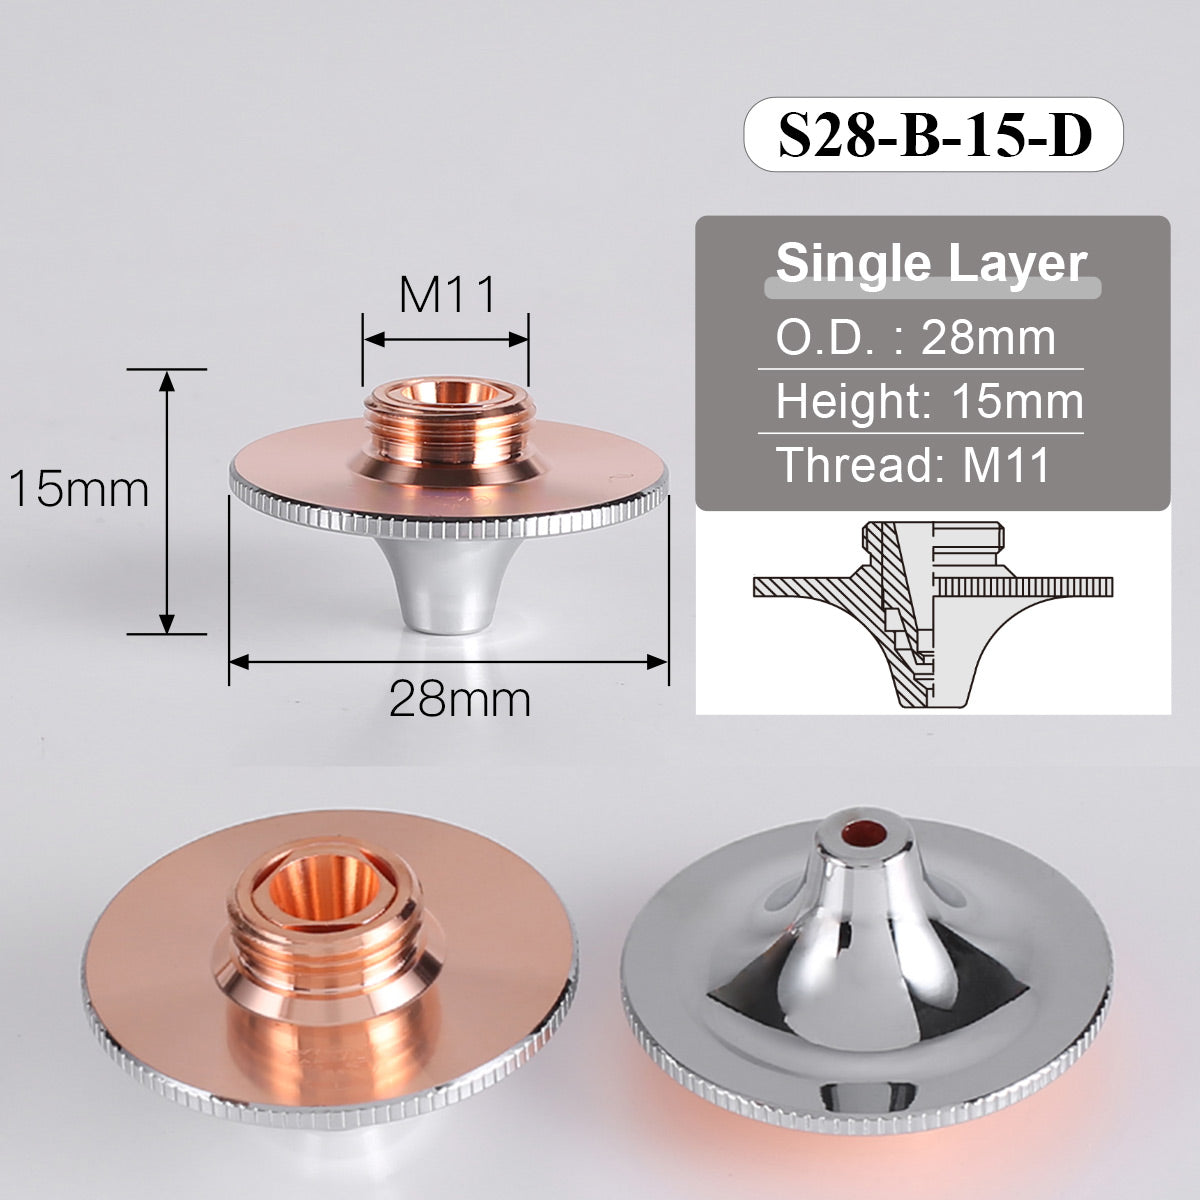 Startnow Laser Cutting Nozzles S28B For Precitec Fiber Machine Weilding Parts